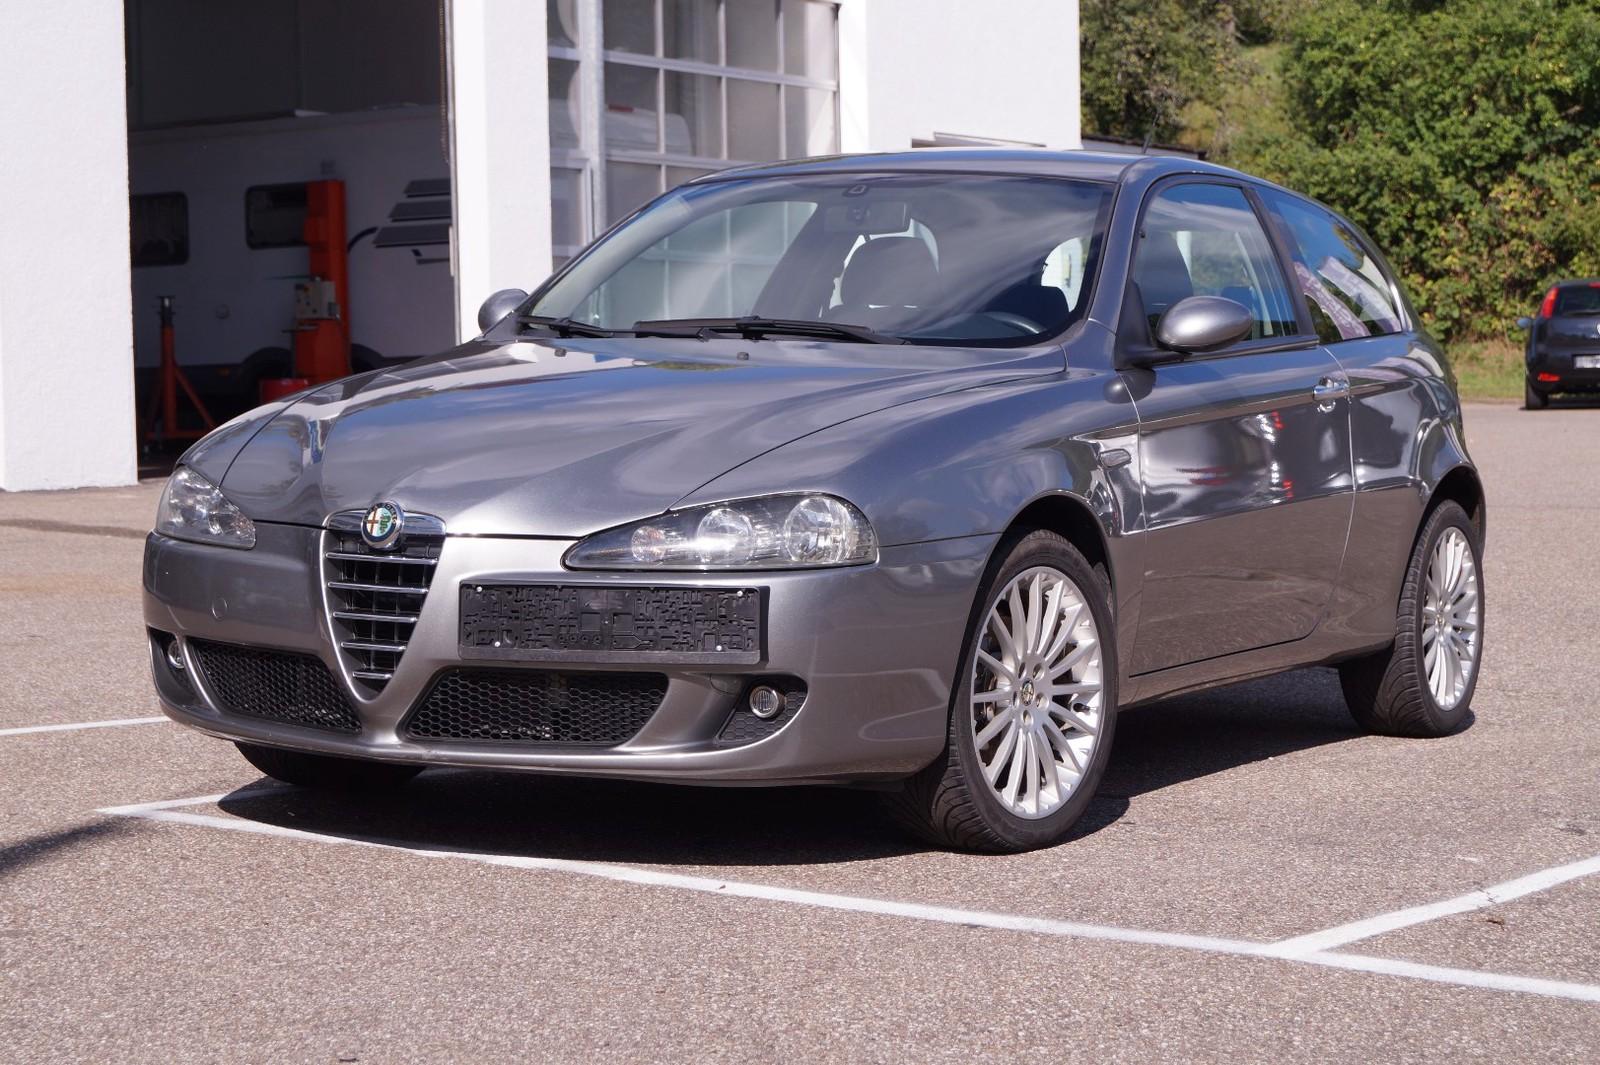 Alfa Romeo 147 1.6 TS specs, quarter mile, performance data 